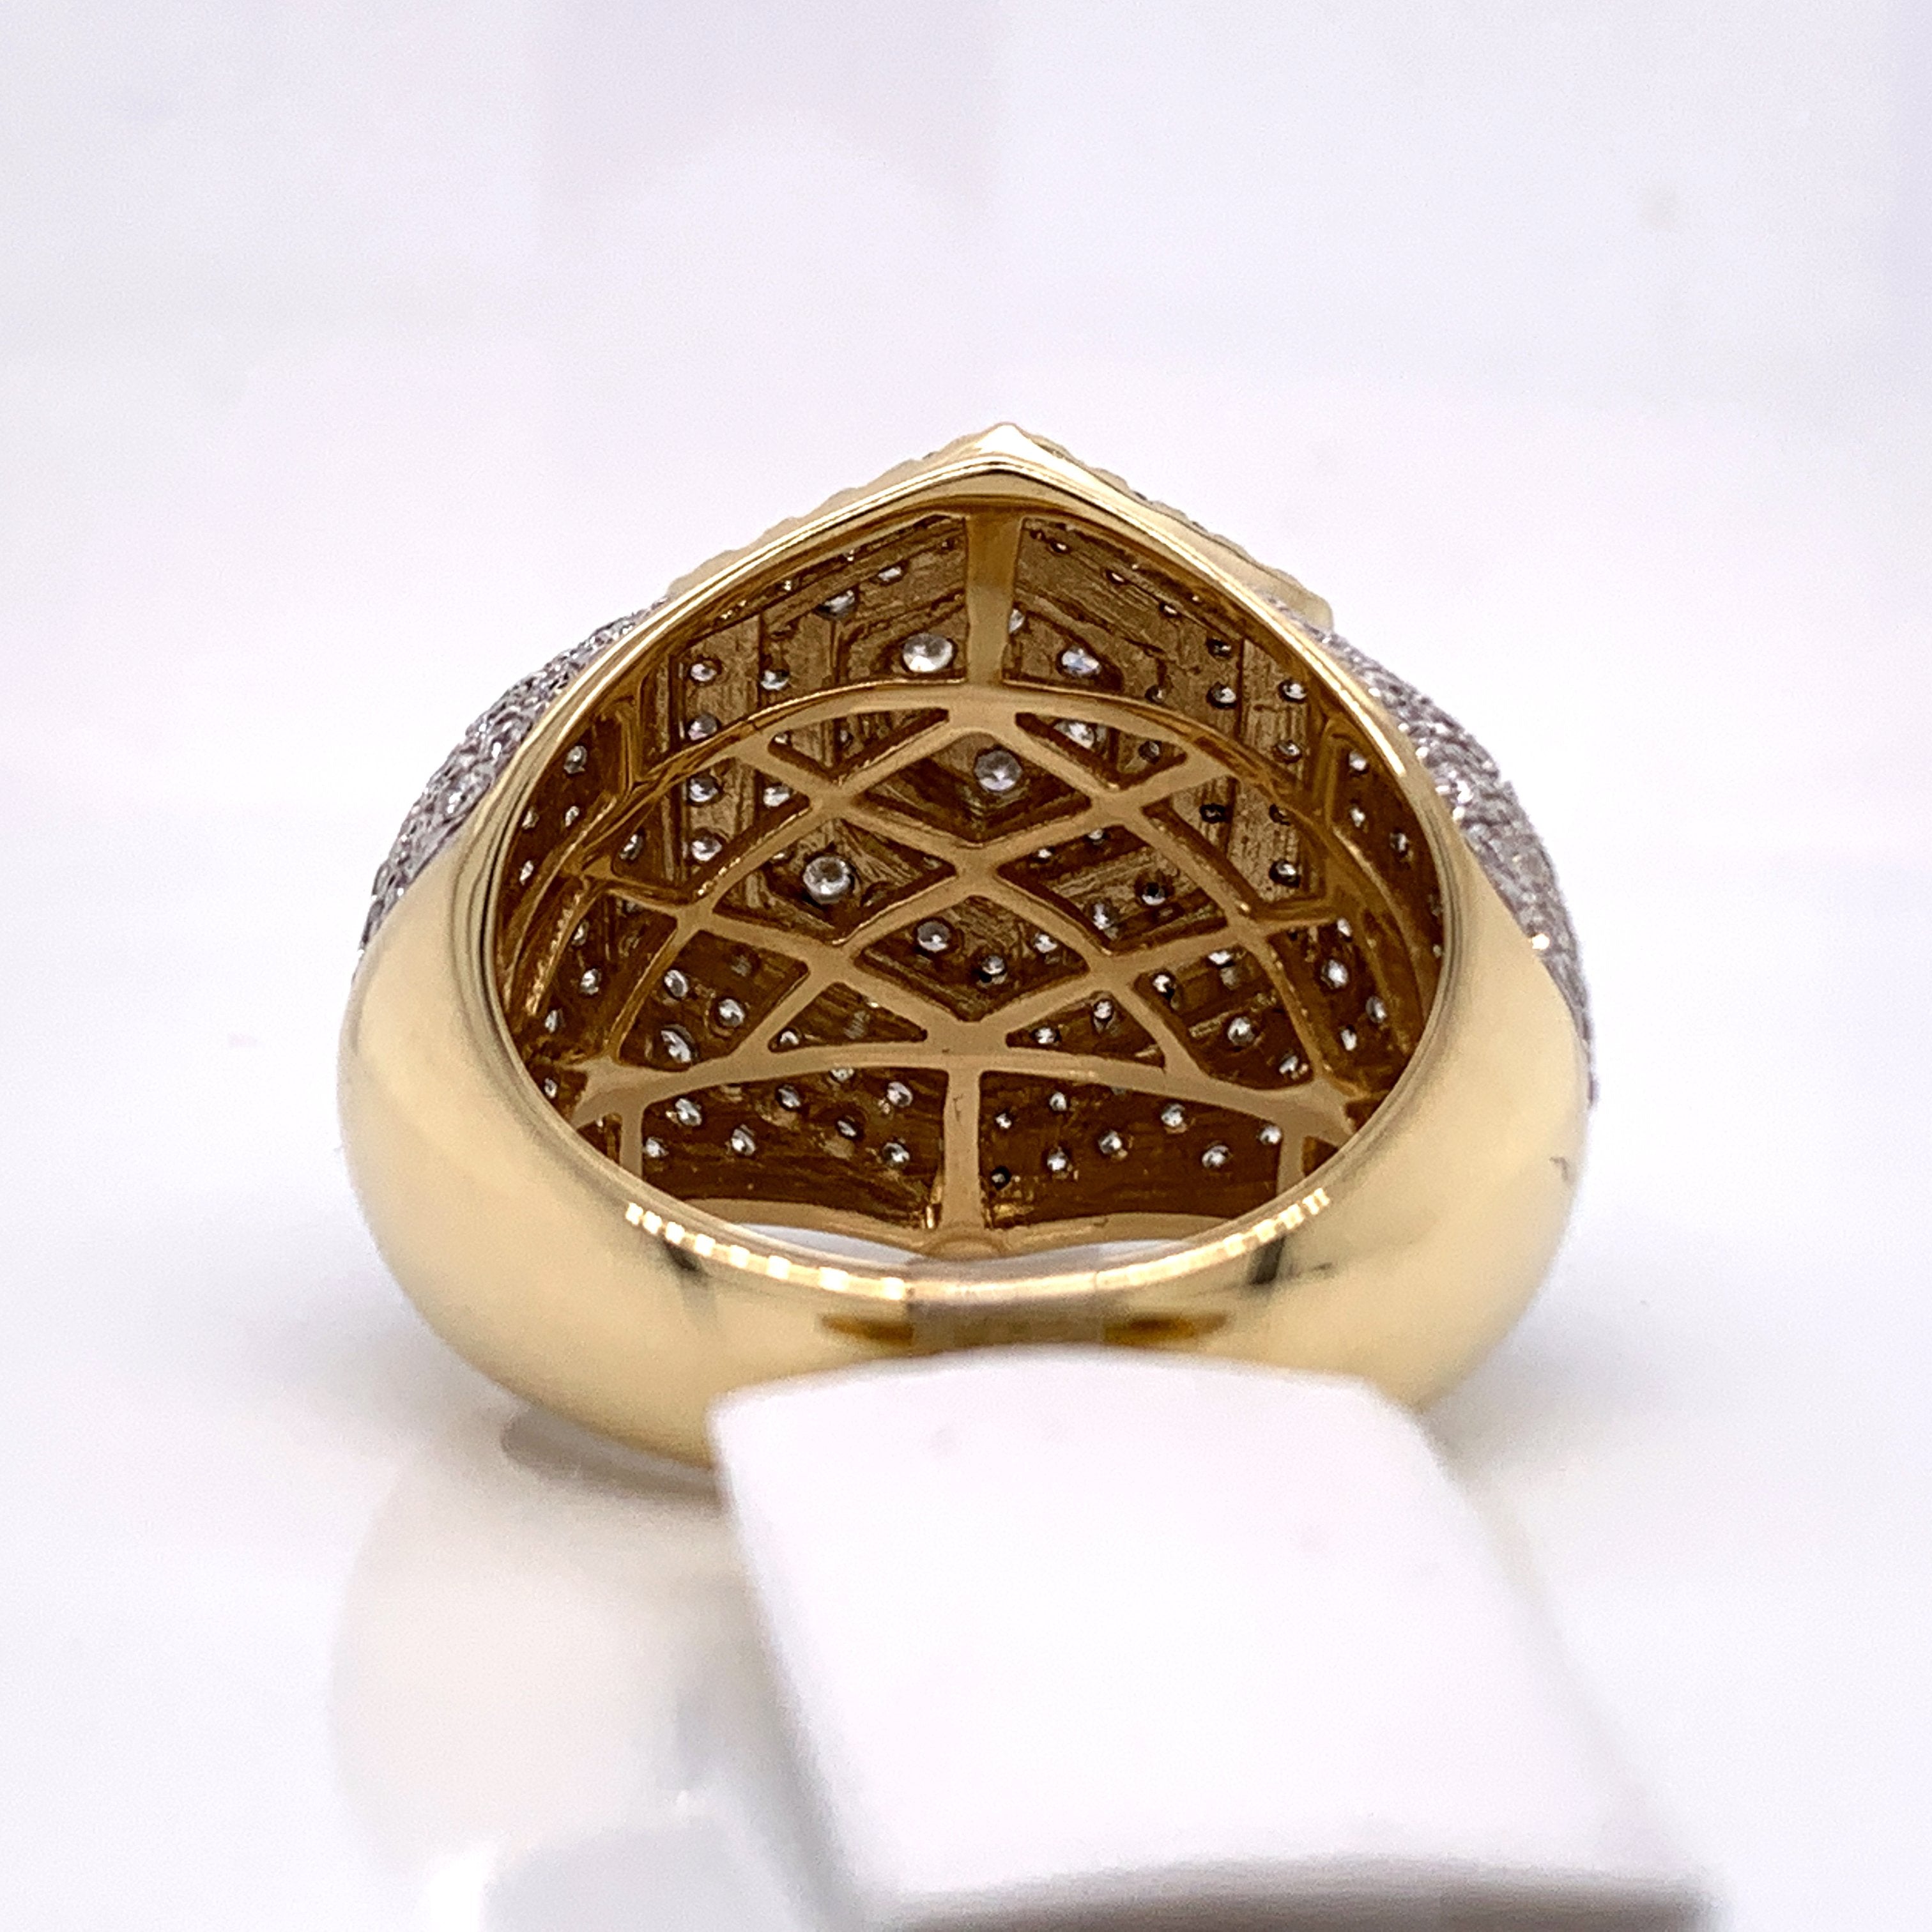 3.47 CT. Diamond Ring in 10K Gold - White Carat Diamonds 